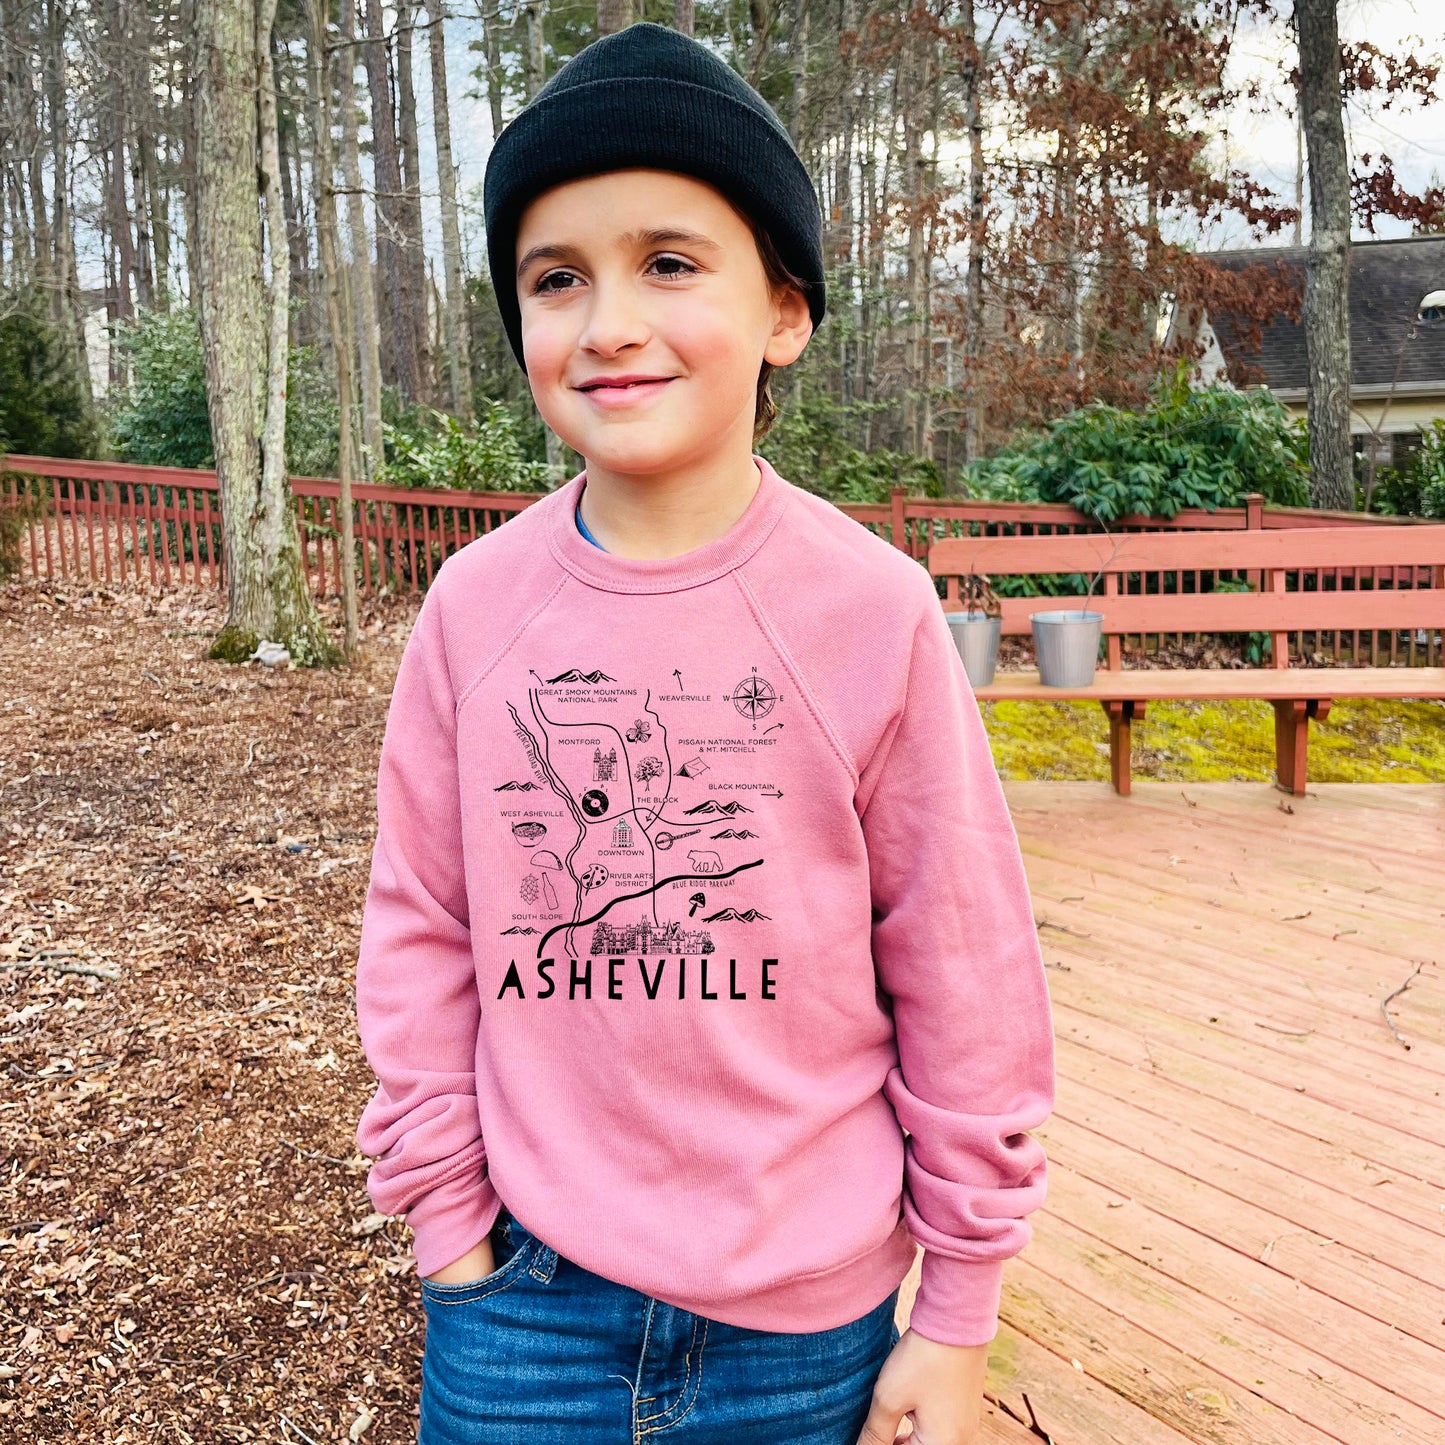 Asheville Map - Kid's Sweatshirt - Heather Gray or Mauve